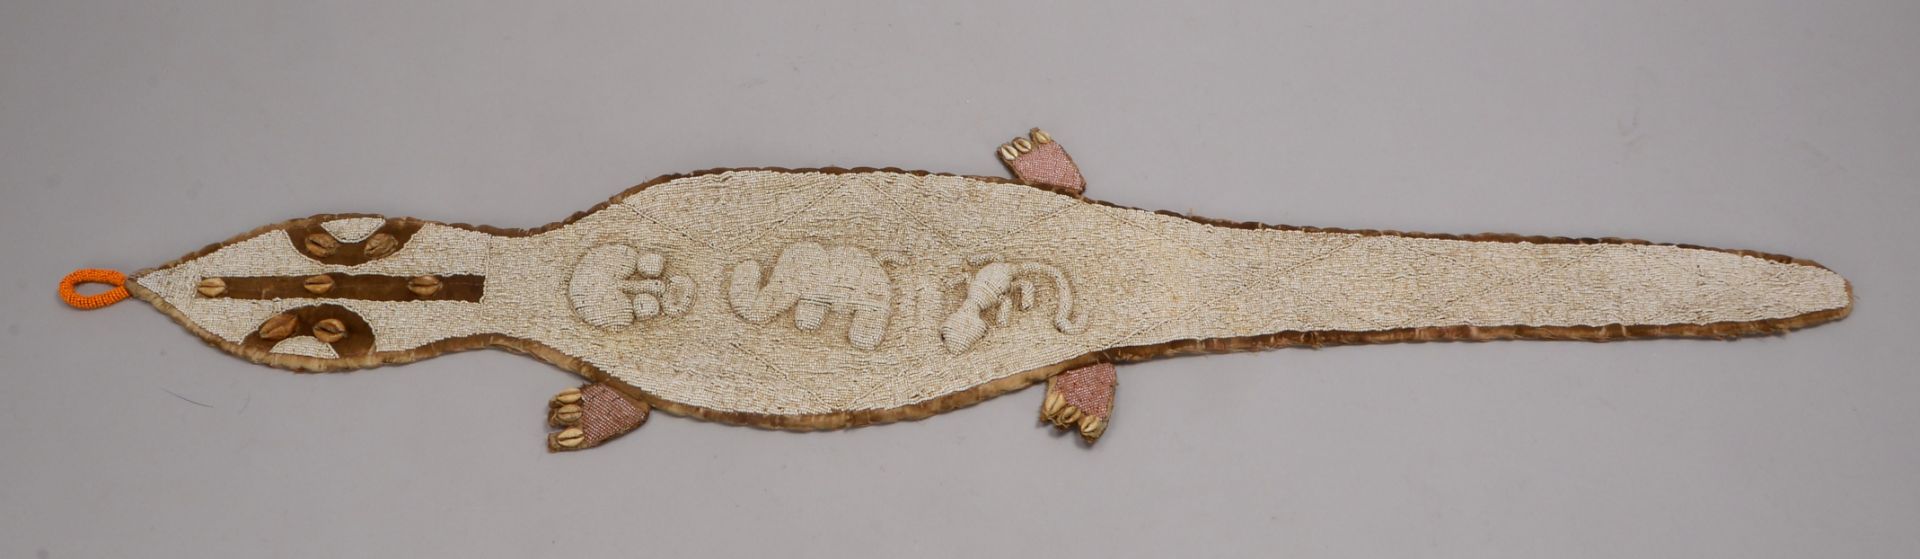 Wandbehang (Afrika), mit Perlen- und Kaurimuschelbehang - in Krokodilform gestaltet; L&auml;nge 137